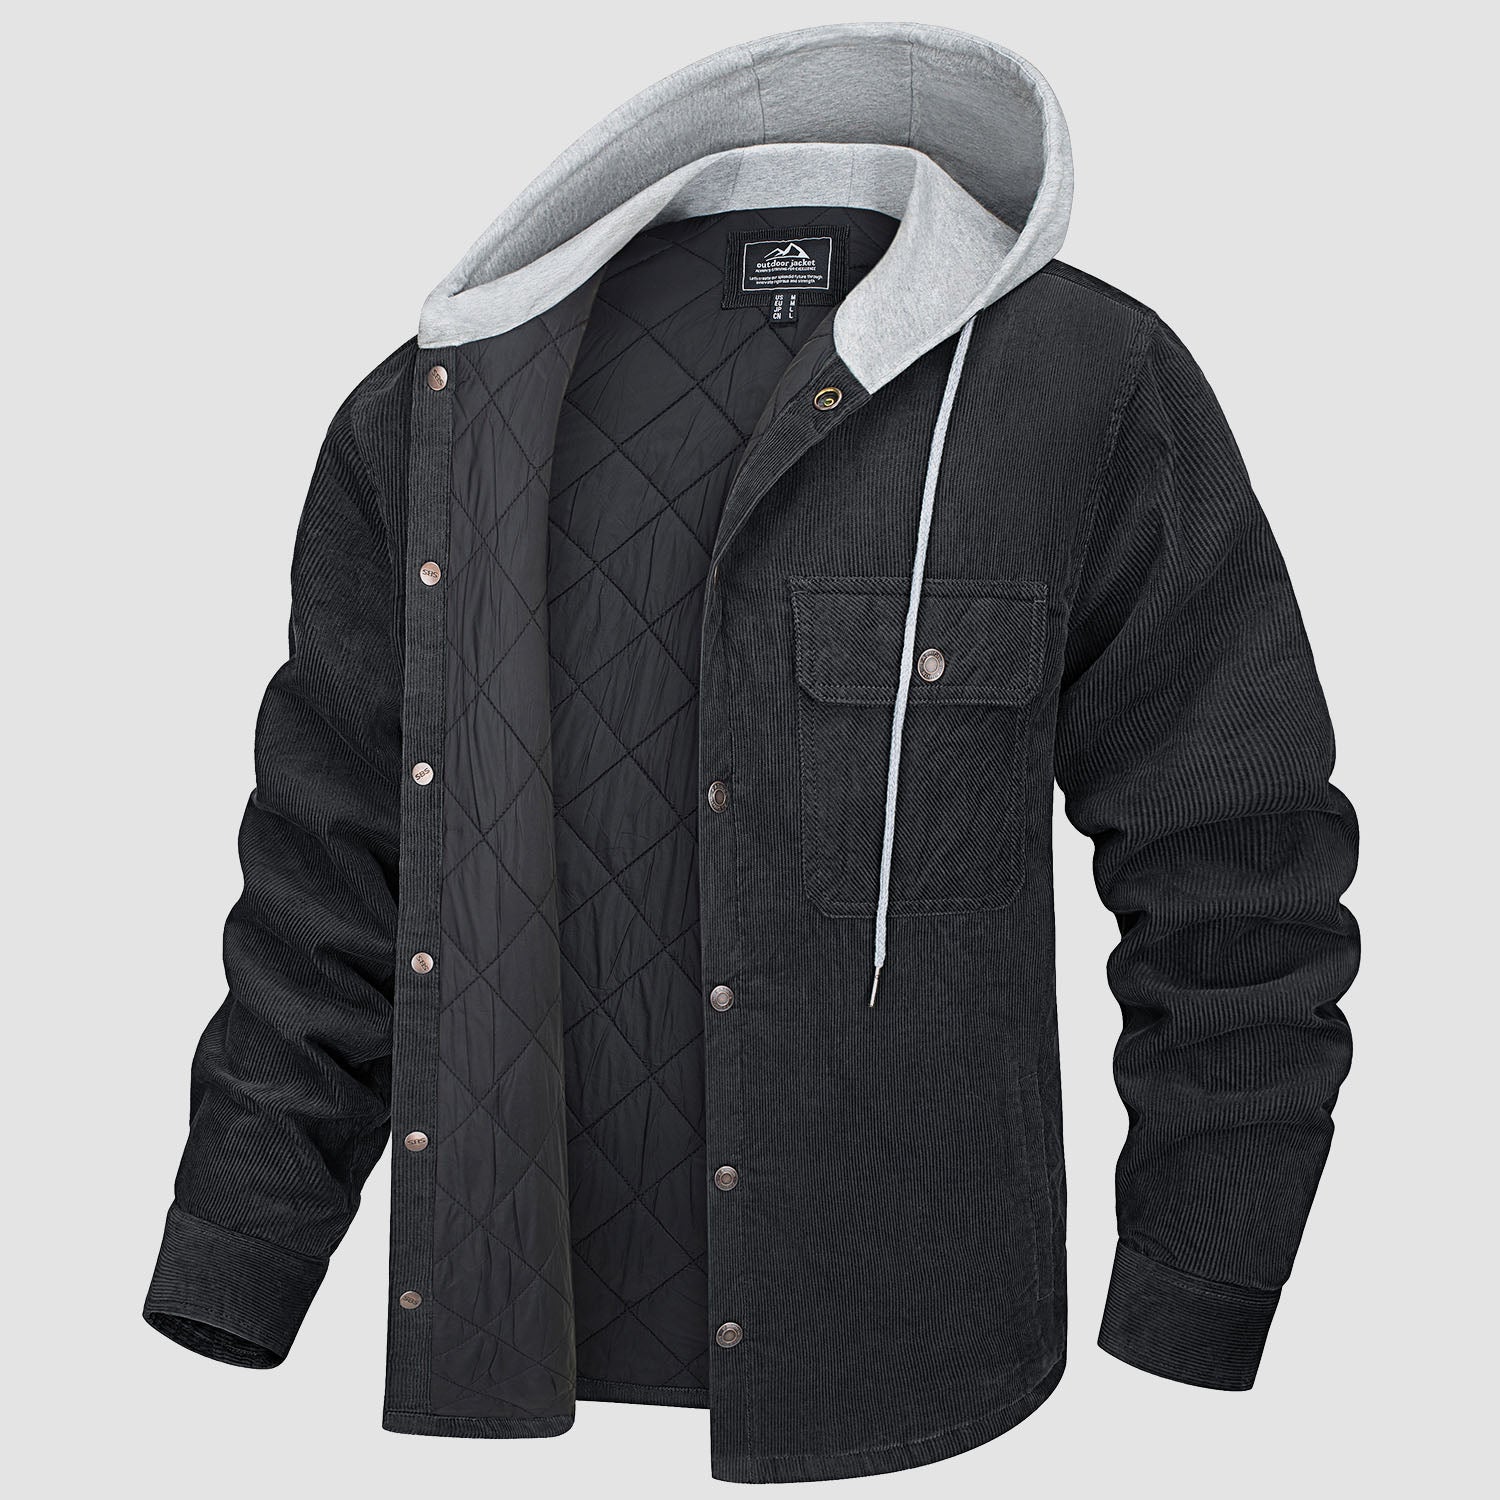 Men's Corduroy Jacket Hoodies Quilted Lined Winter Jacket